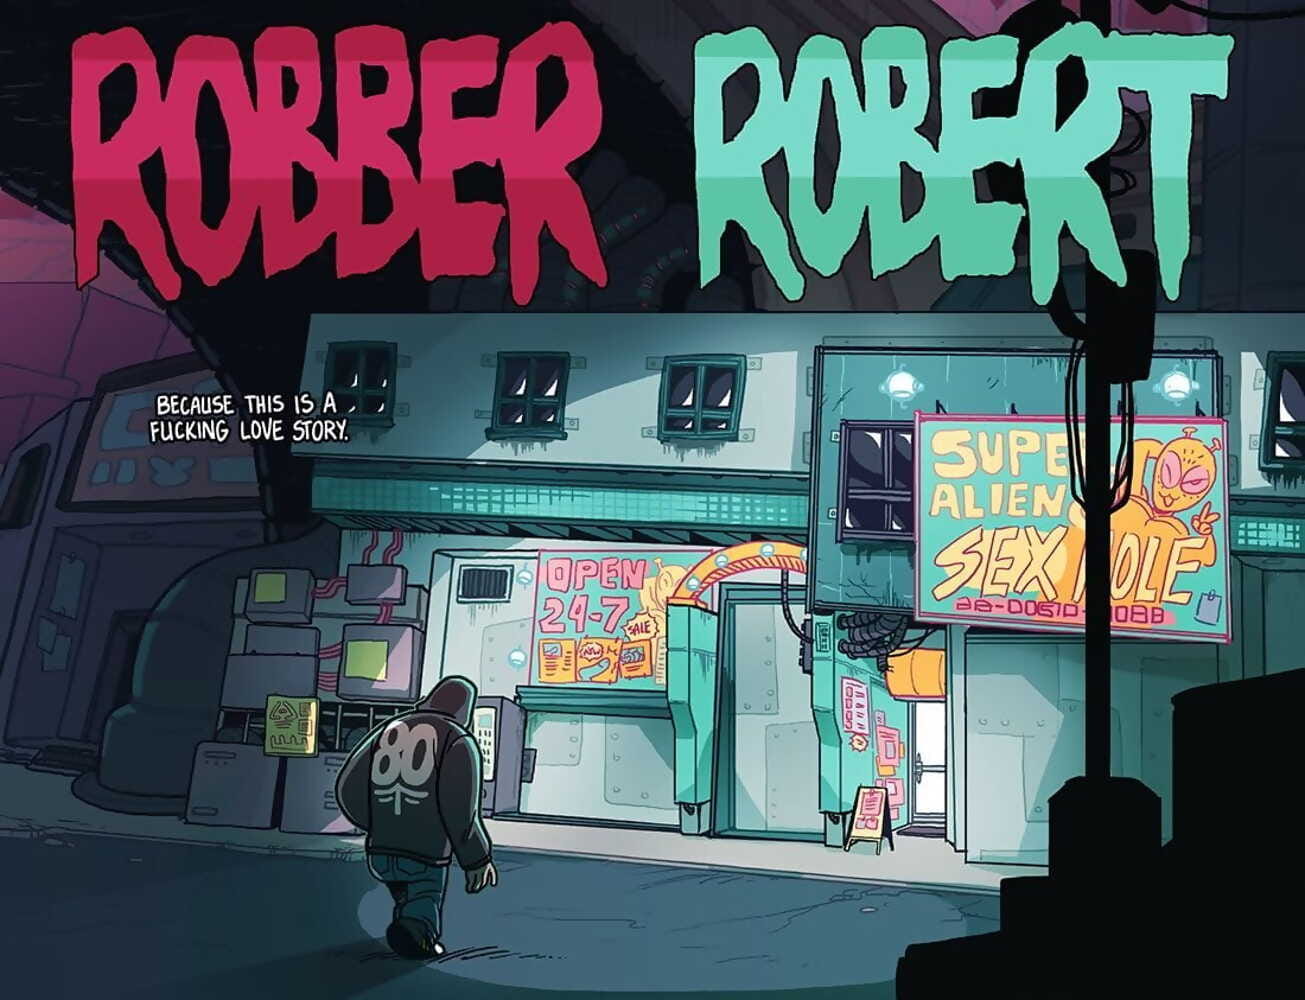 Robber Robert